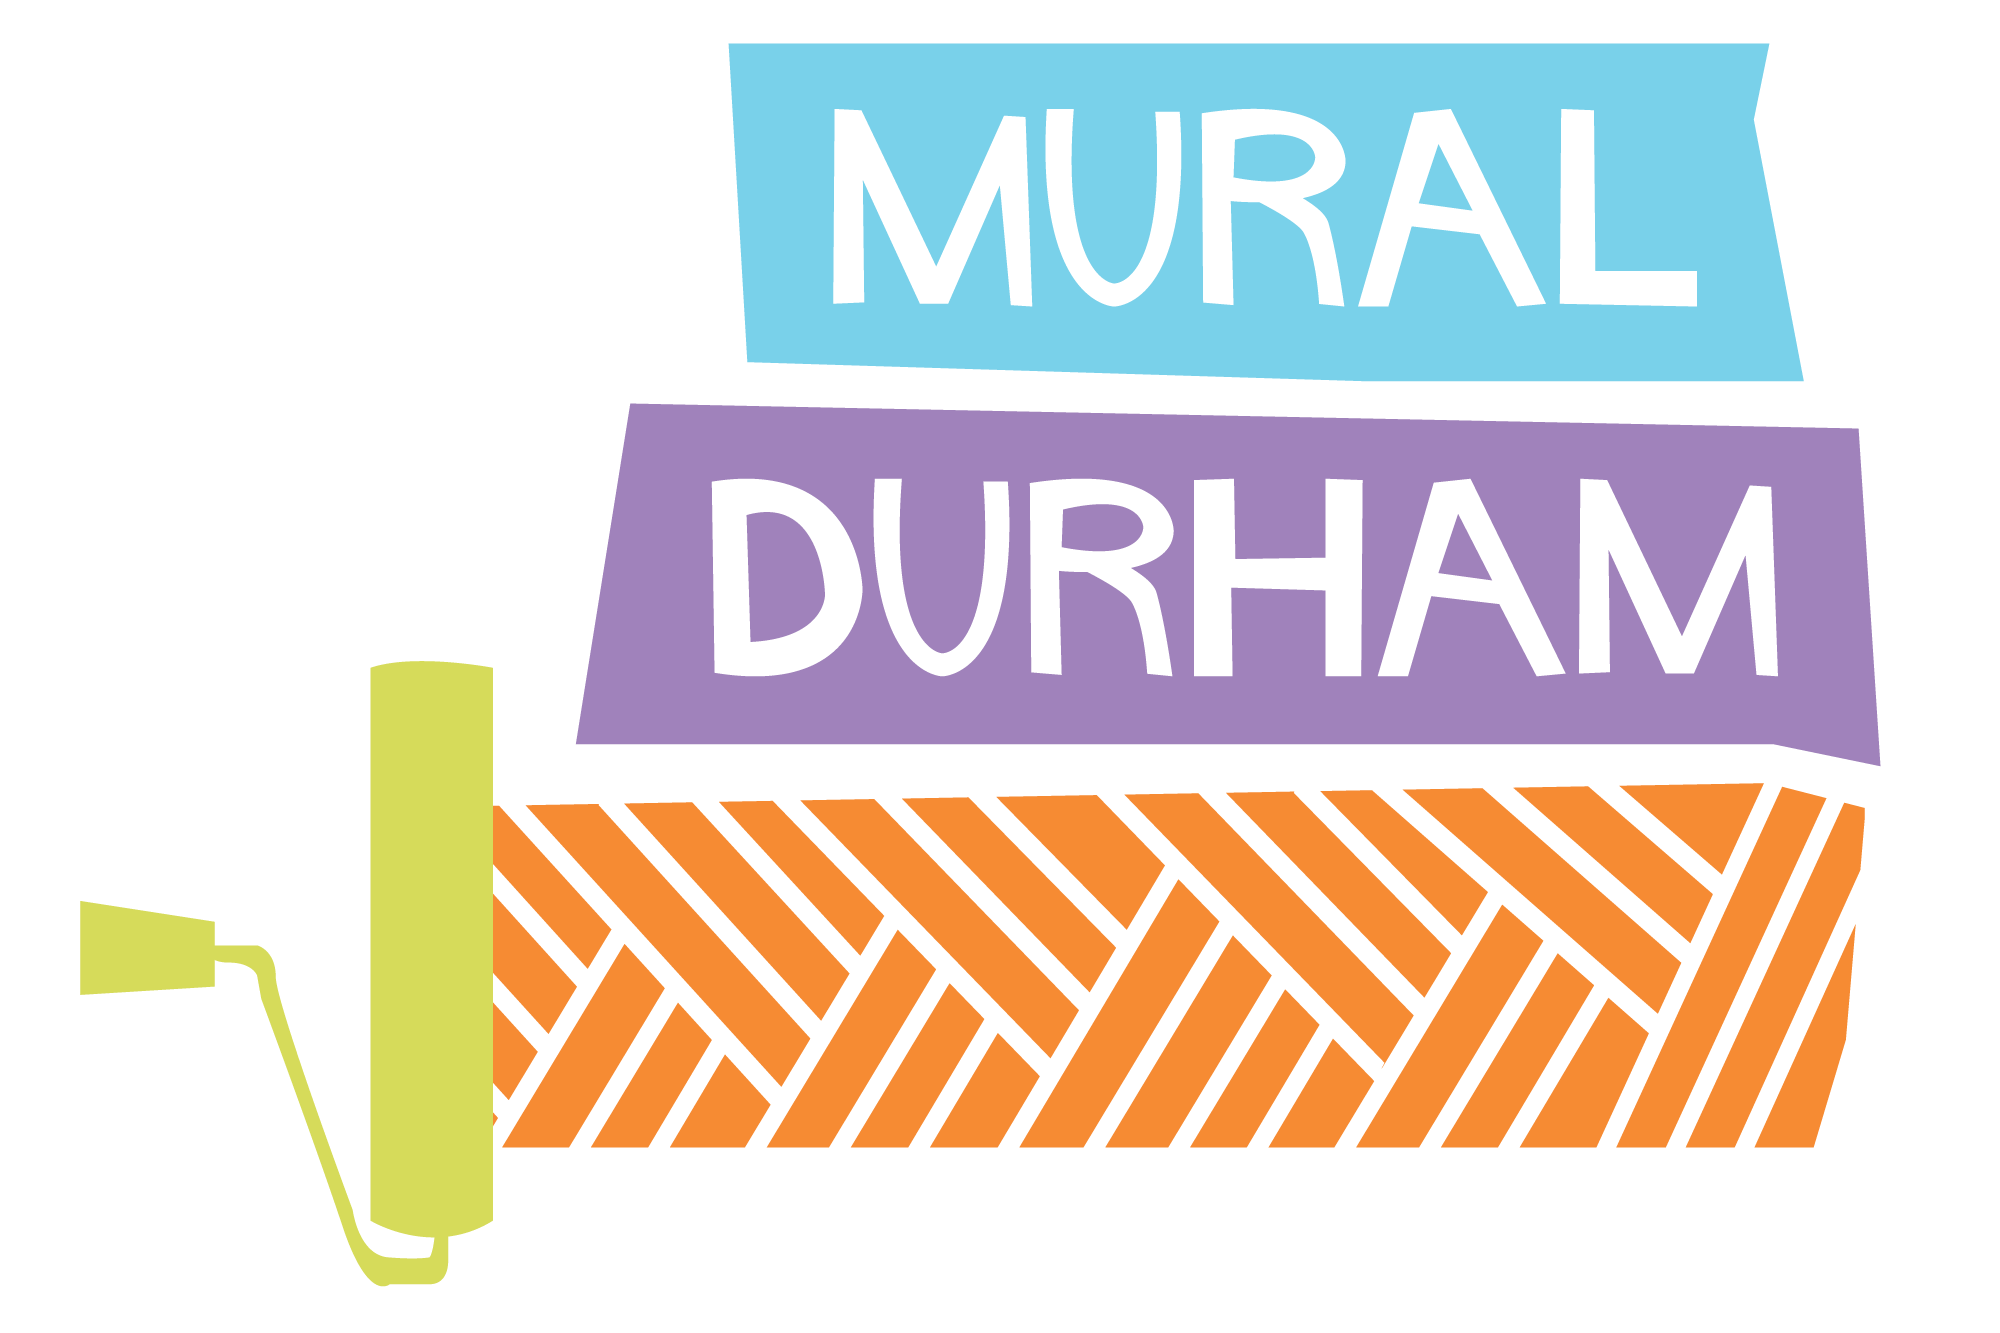 Mural Durham logo